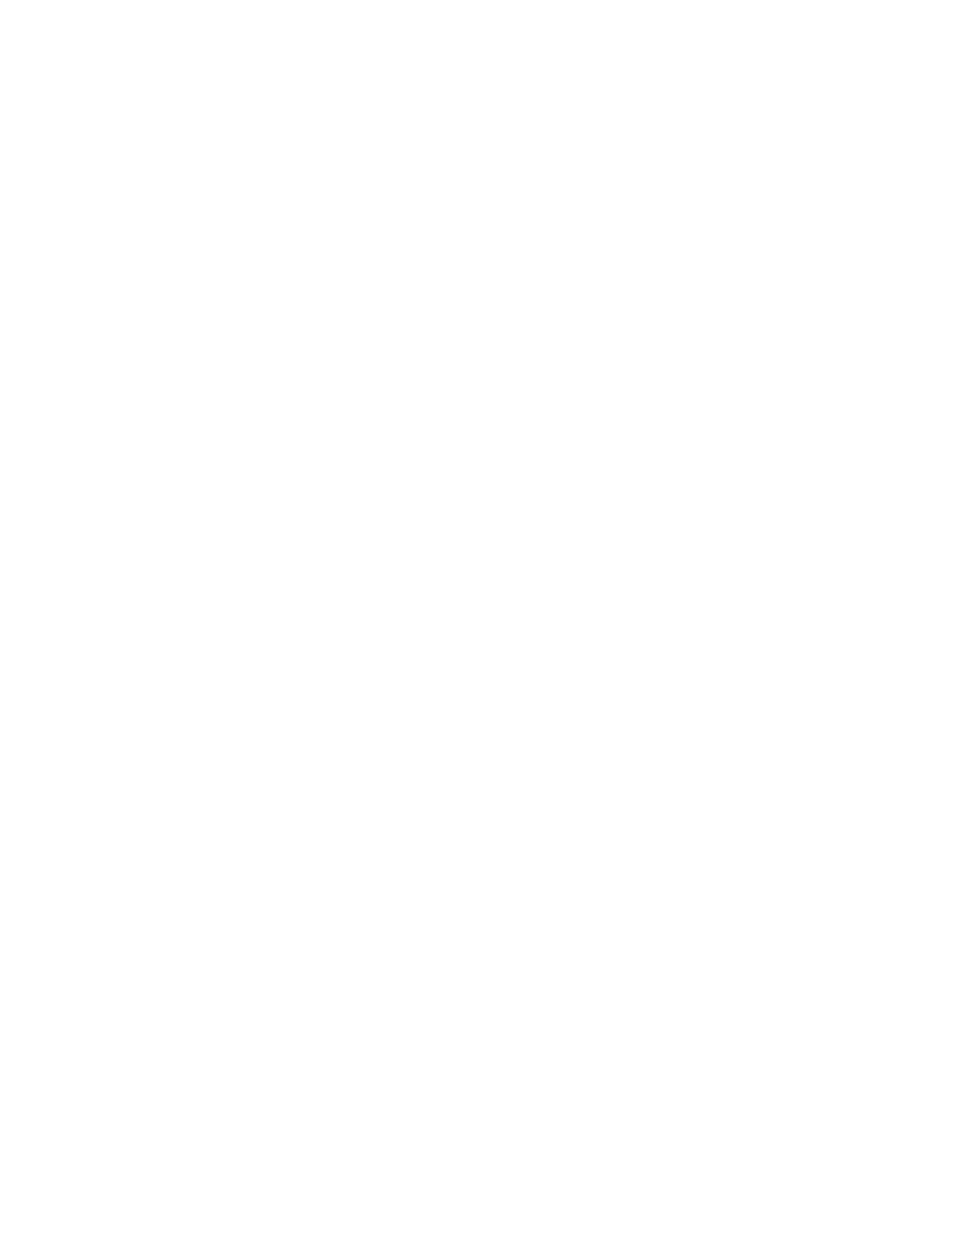 A woman in an elegant yellow dress is walking along a narrow, modern metal bridge surrounded by dense tropical foliage. The walkway creates a striking geometric pattern as it leads through the lush green environment